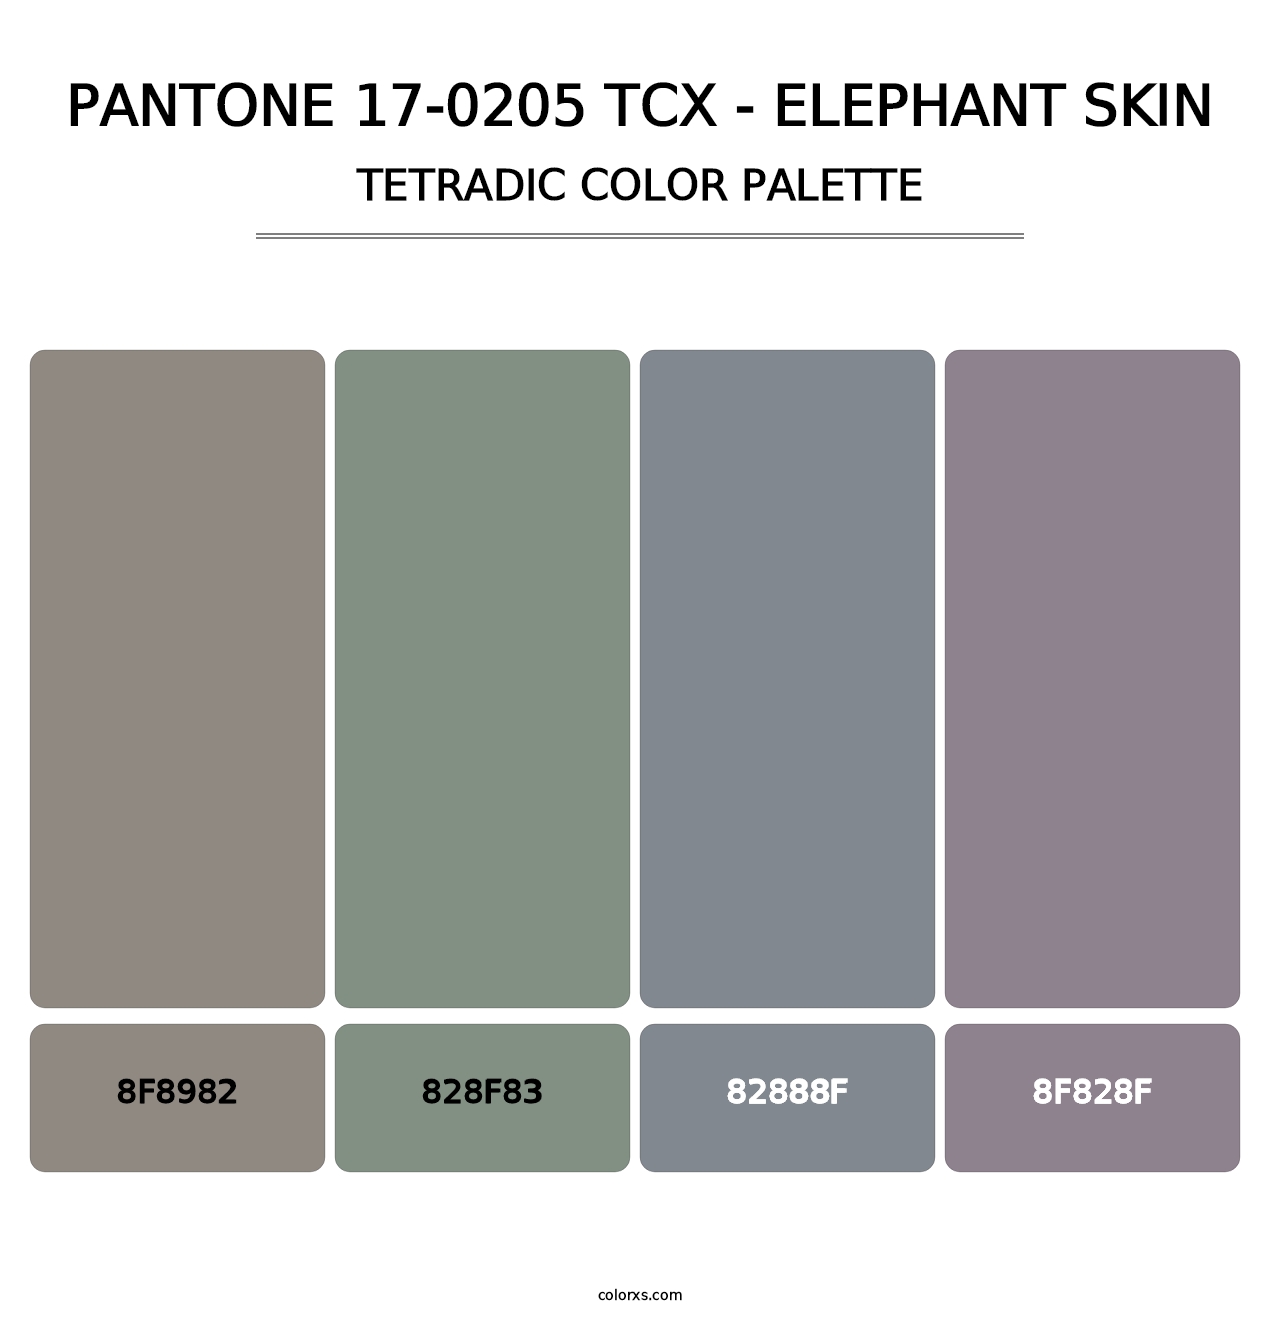 PANTONE 17-0205 TCX - Elephant Skin - Tetradic Color Palette